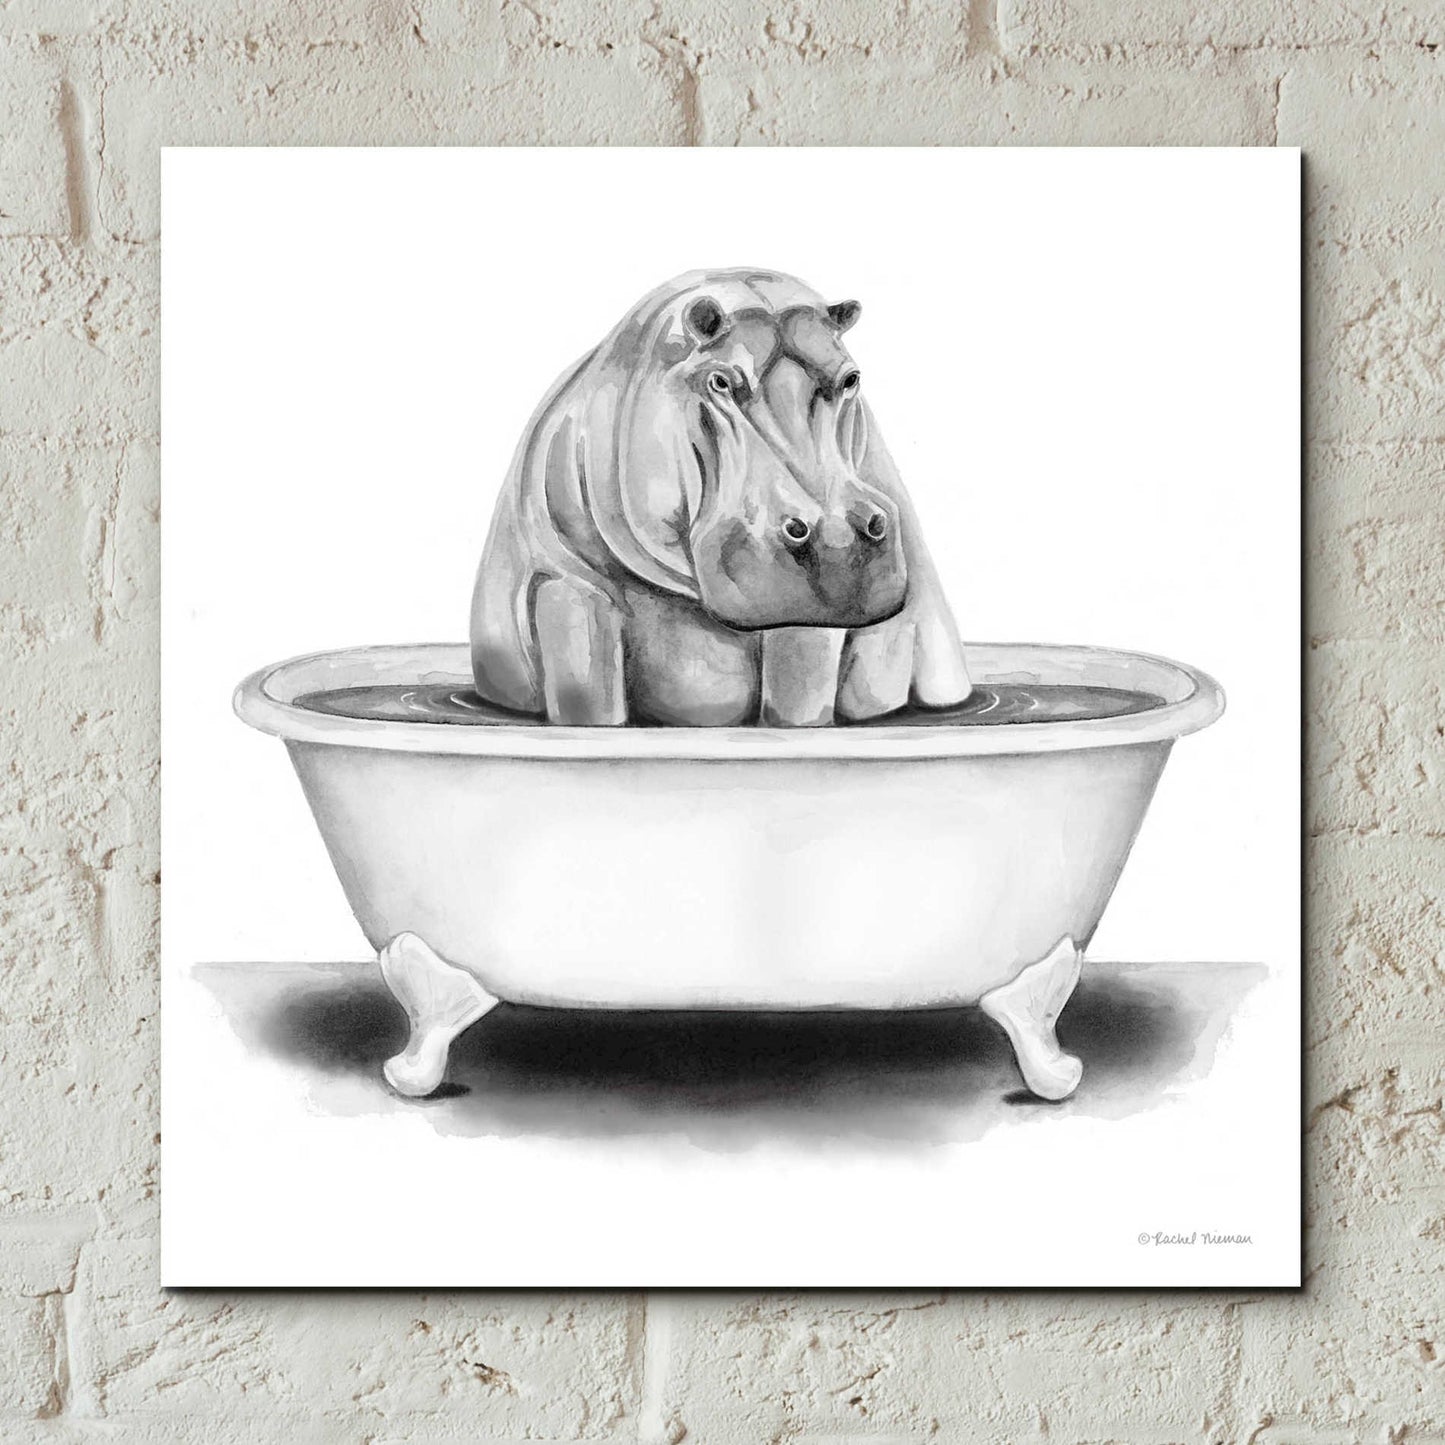 Epic Art 'Hippo in Tub' by Rachel Nieman, Acrylic Glass Wall Art,12x12